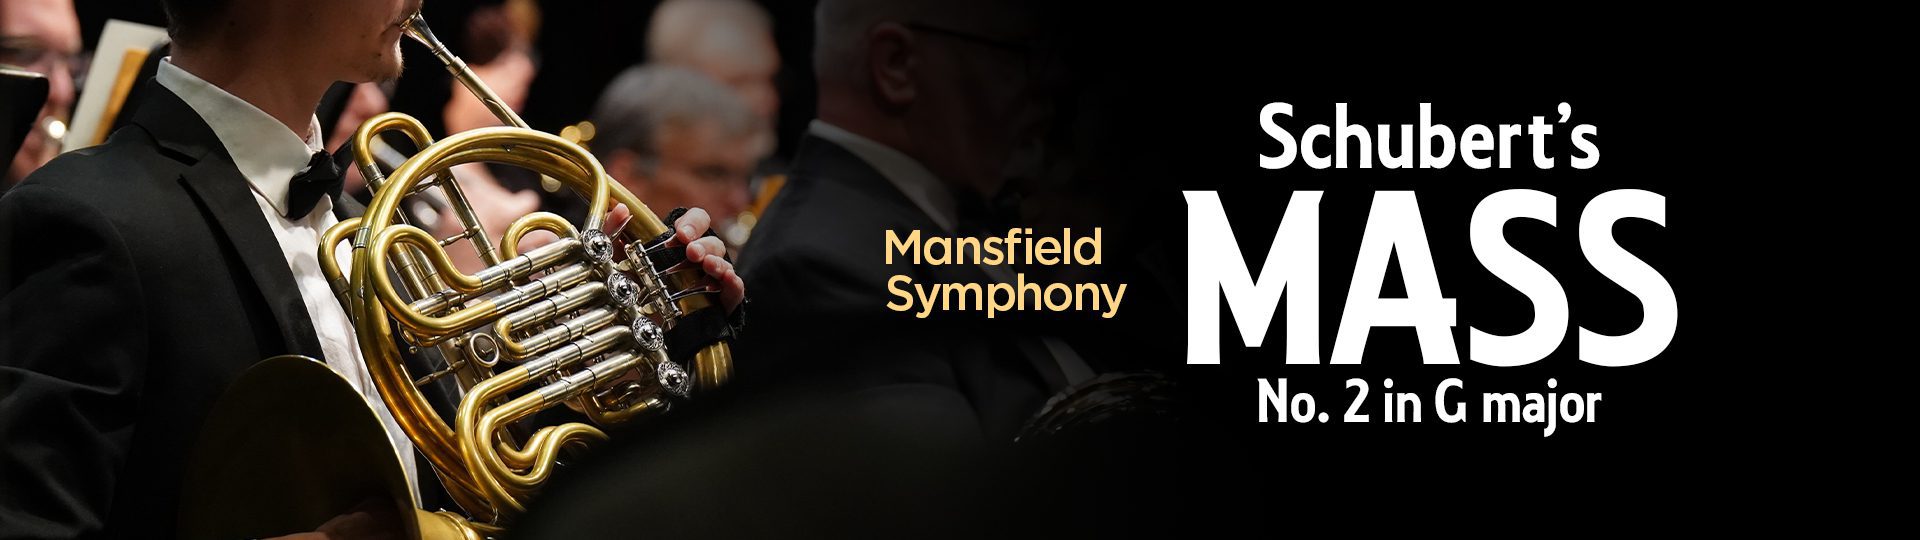 Mansfield Symphony: Schubert's “Mass No. 2 in G major”